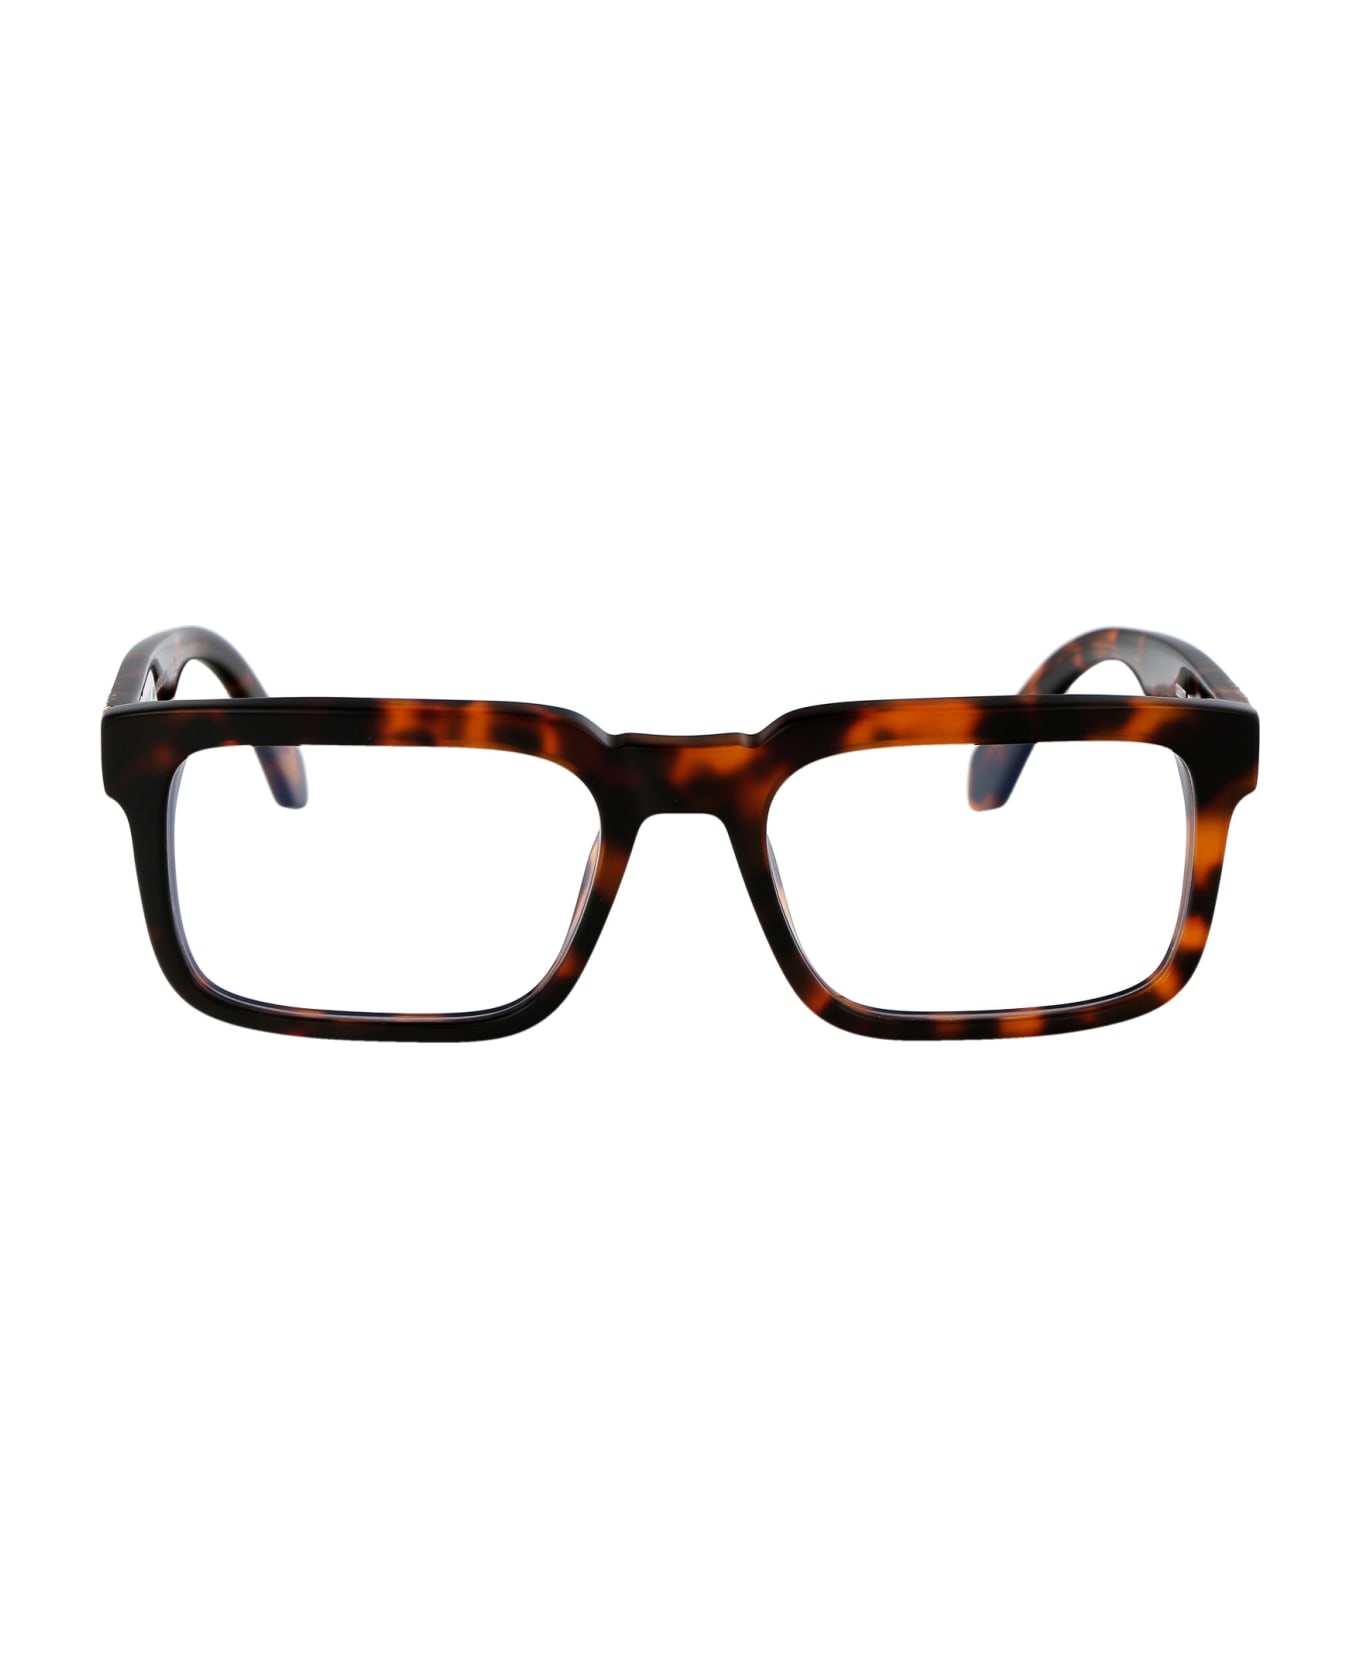 Off-White Optical Style 70 Glasses - 6000 HAVANA